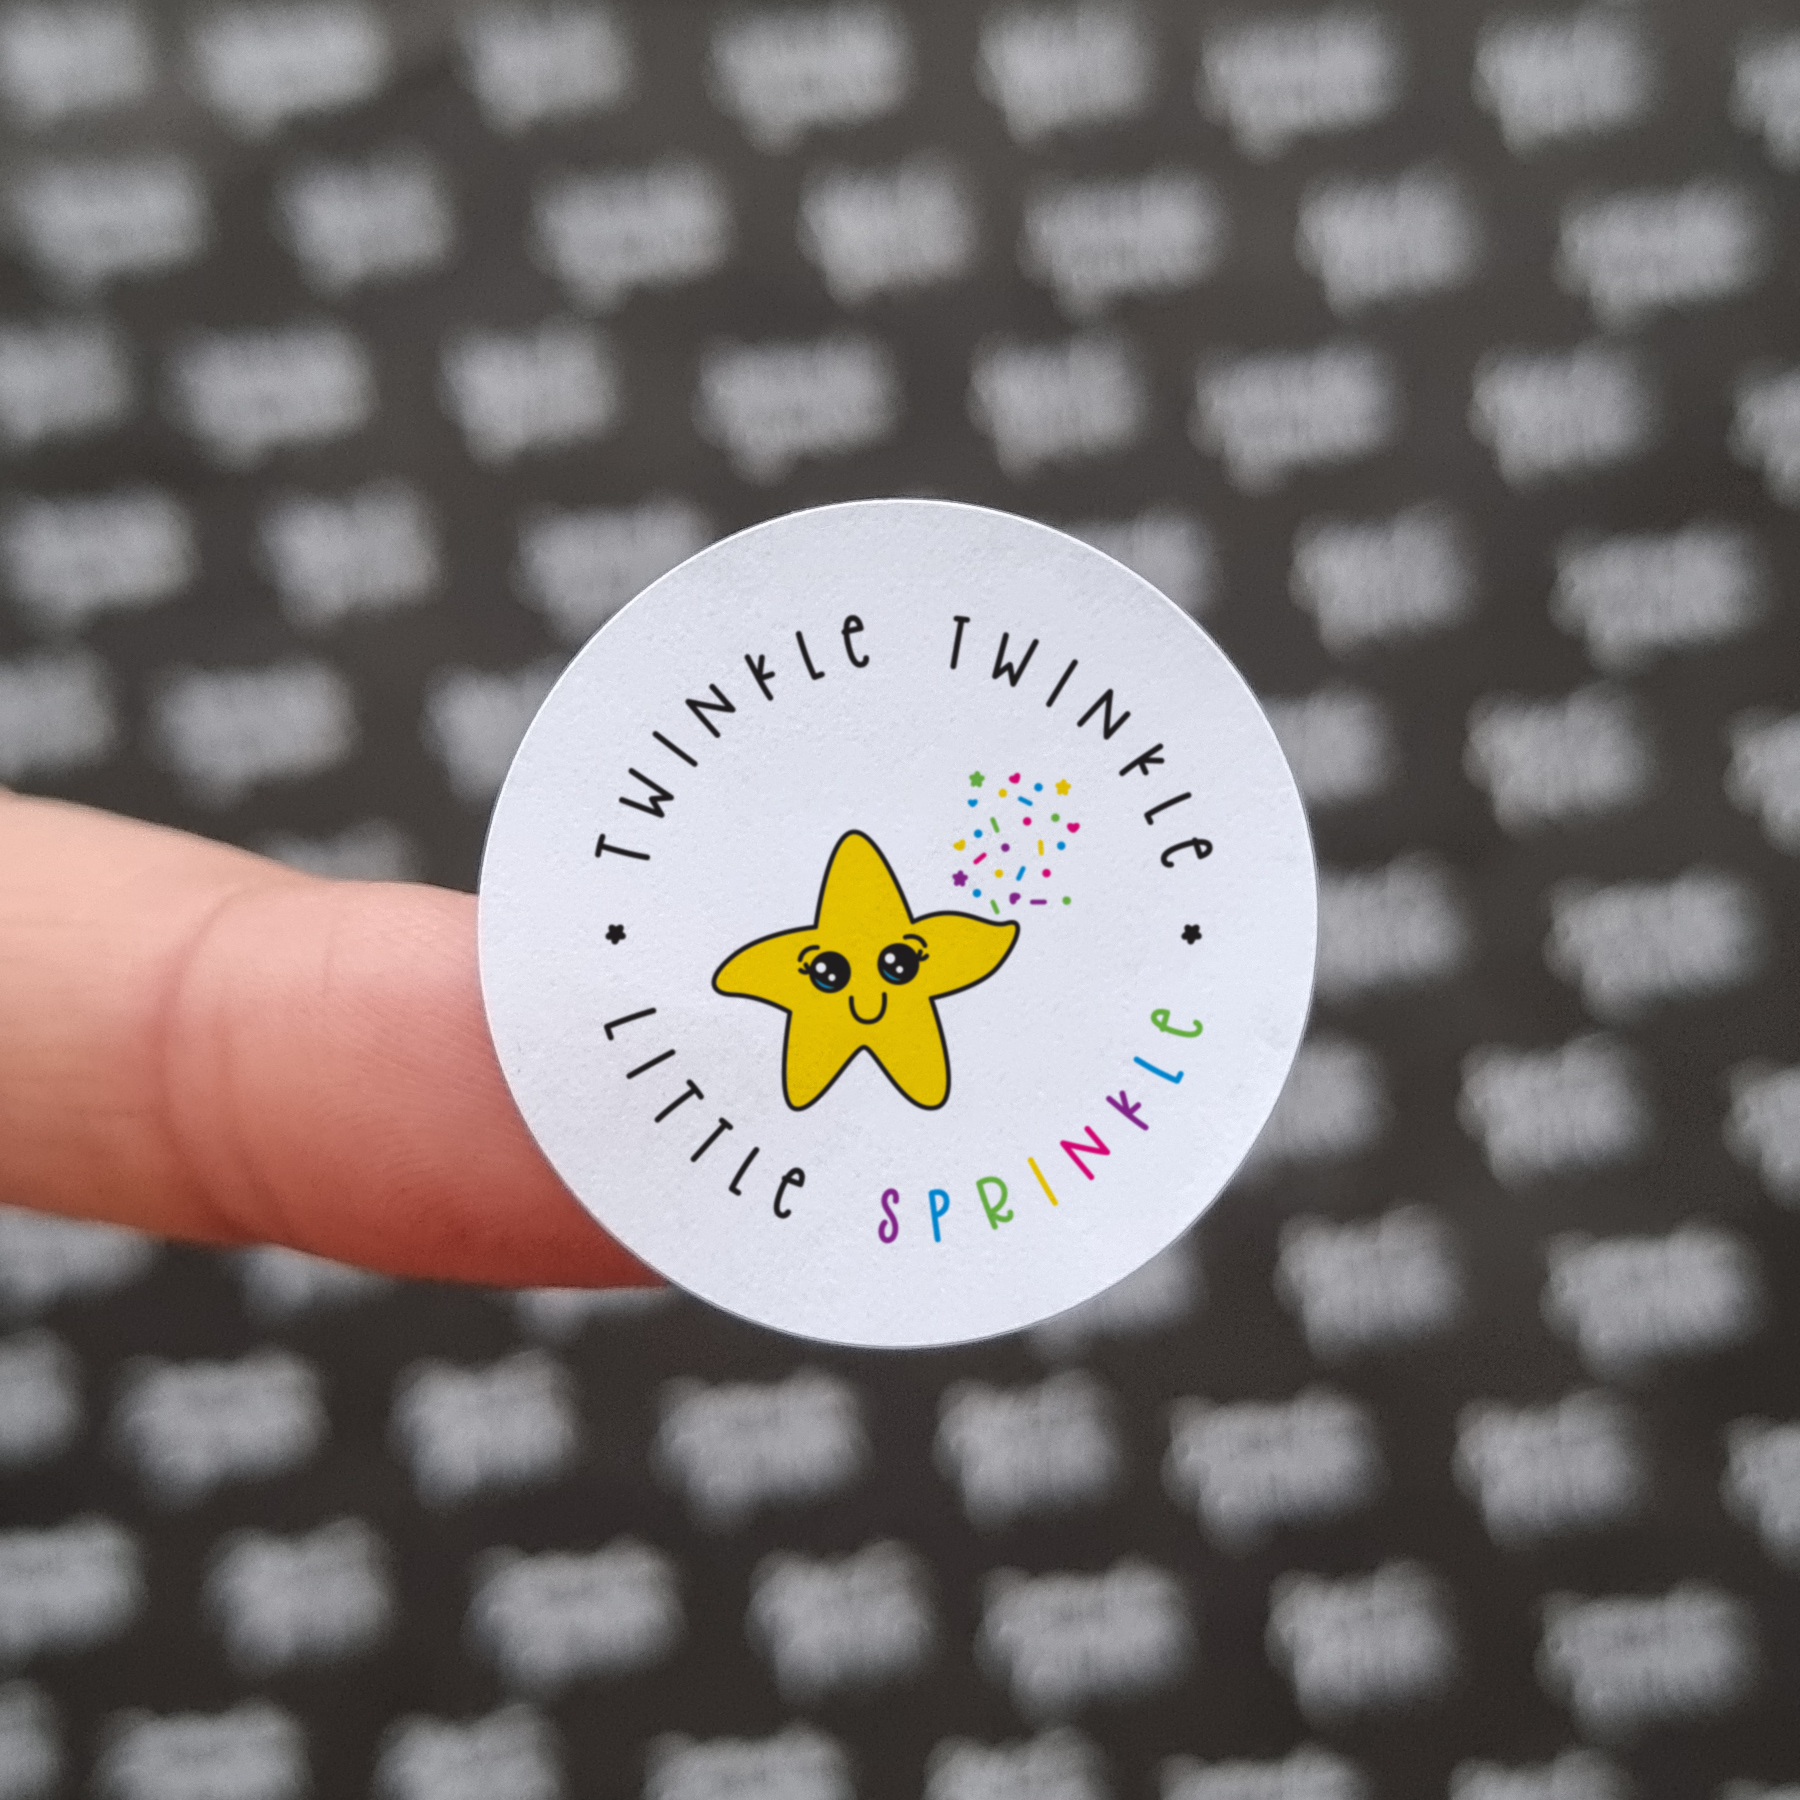 32mm Circle Stickers | Custom logo stickers for Twinkle Twinkle Little Sprinkle by Sweet Petite